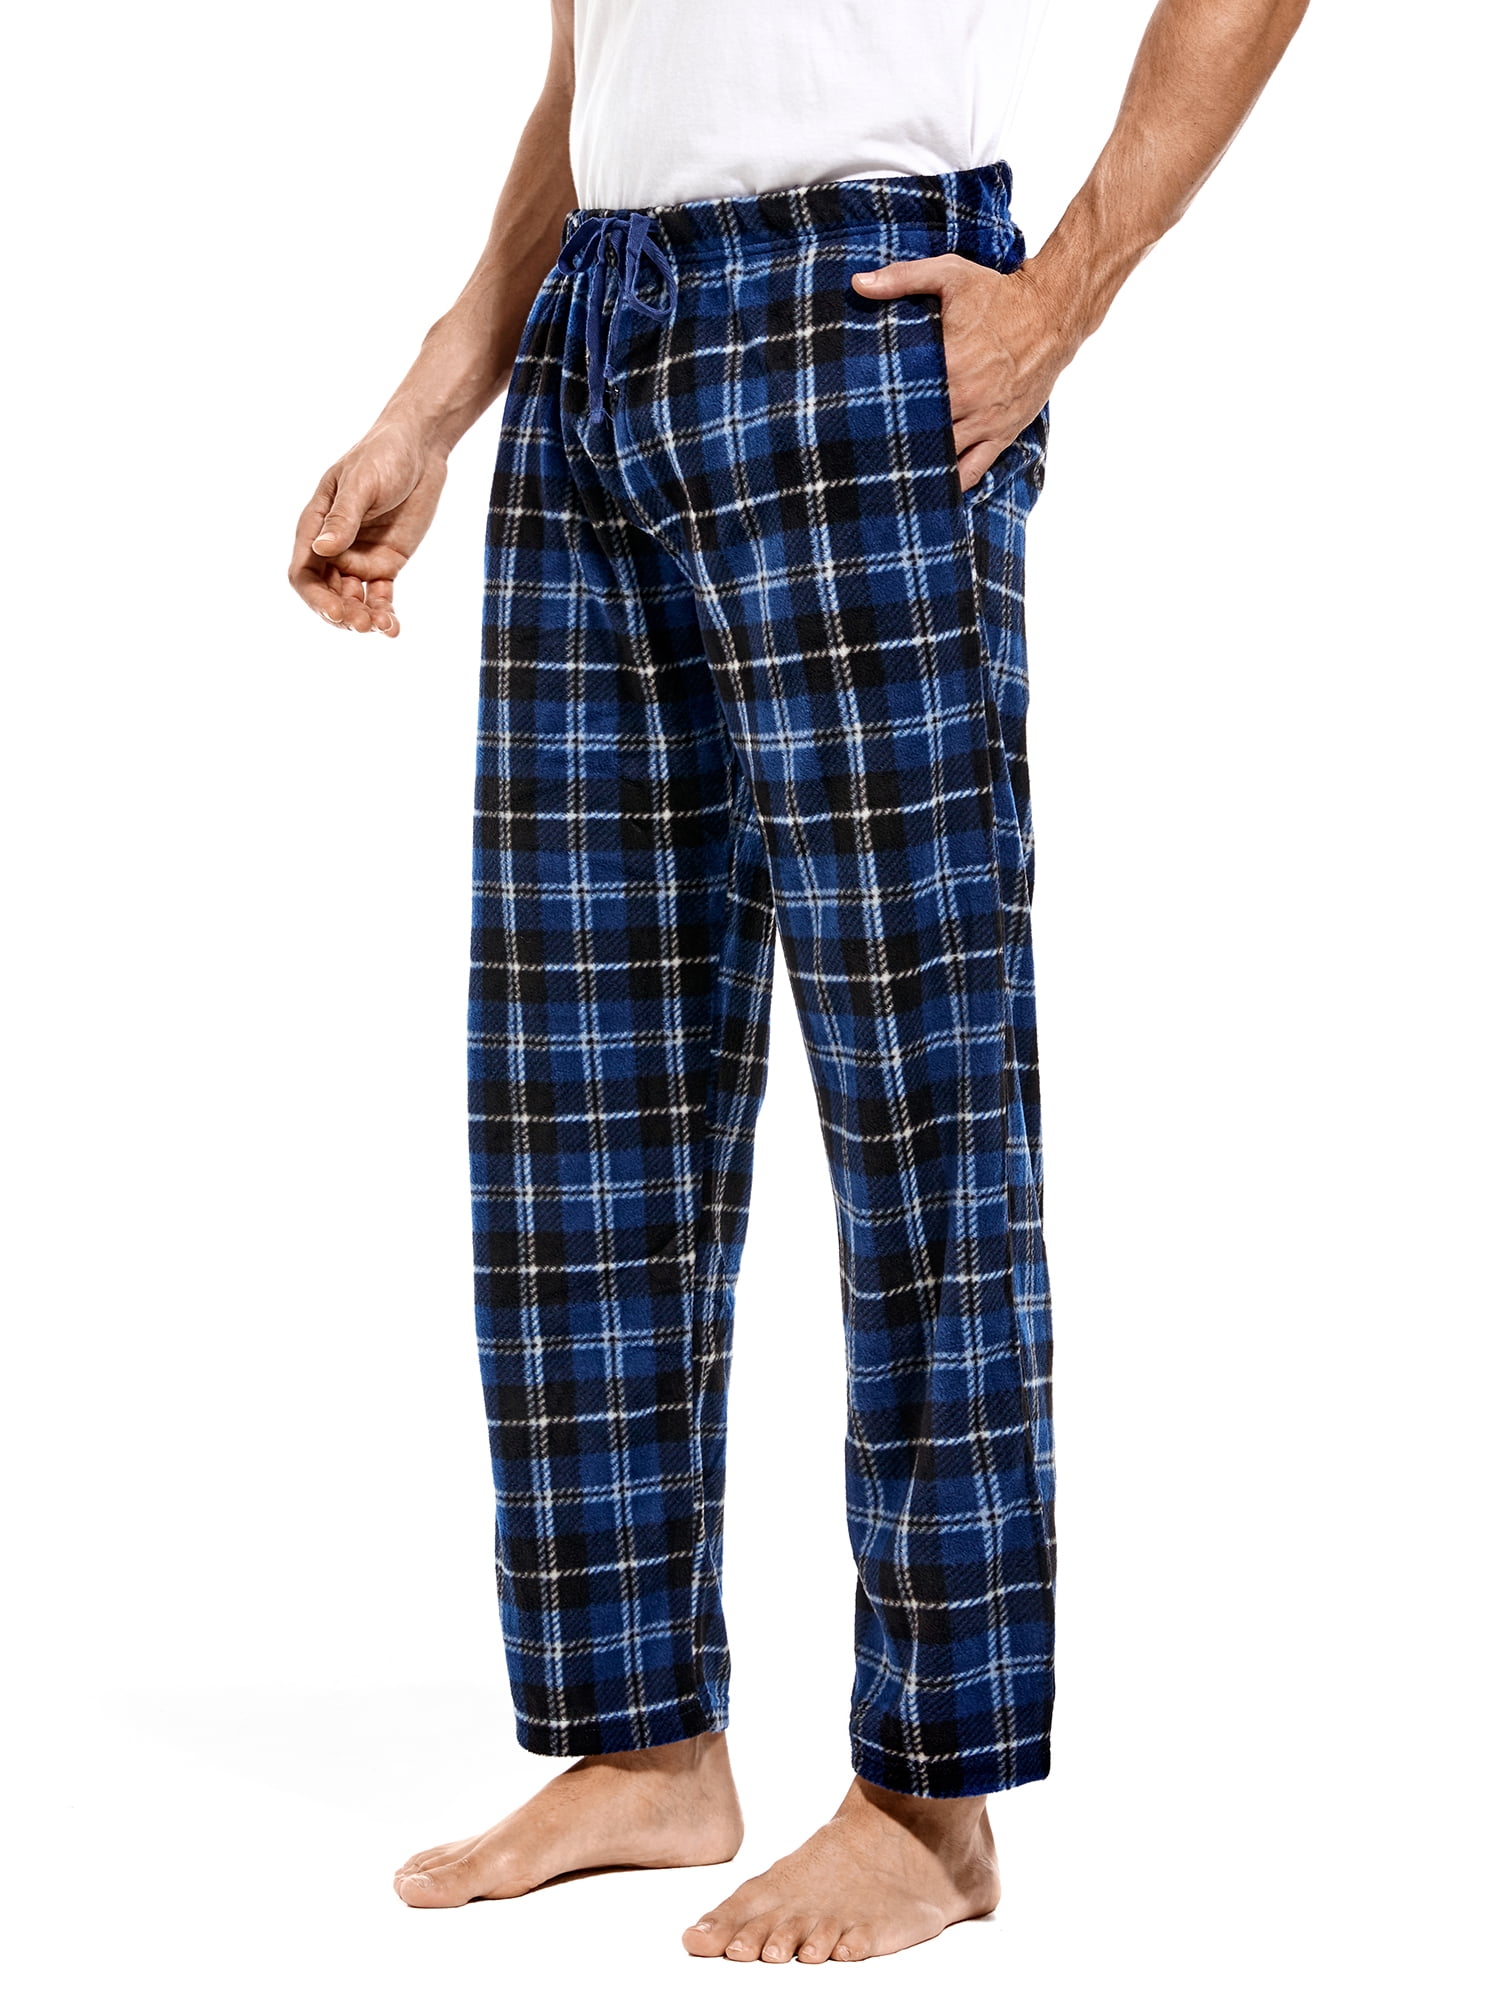 DG Hill Mens Sleep Pants, Fleece Pajama Bottoms with Pockets, 3